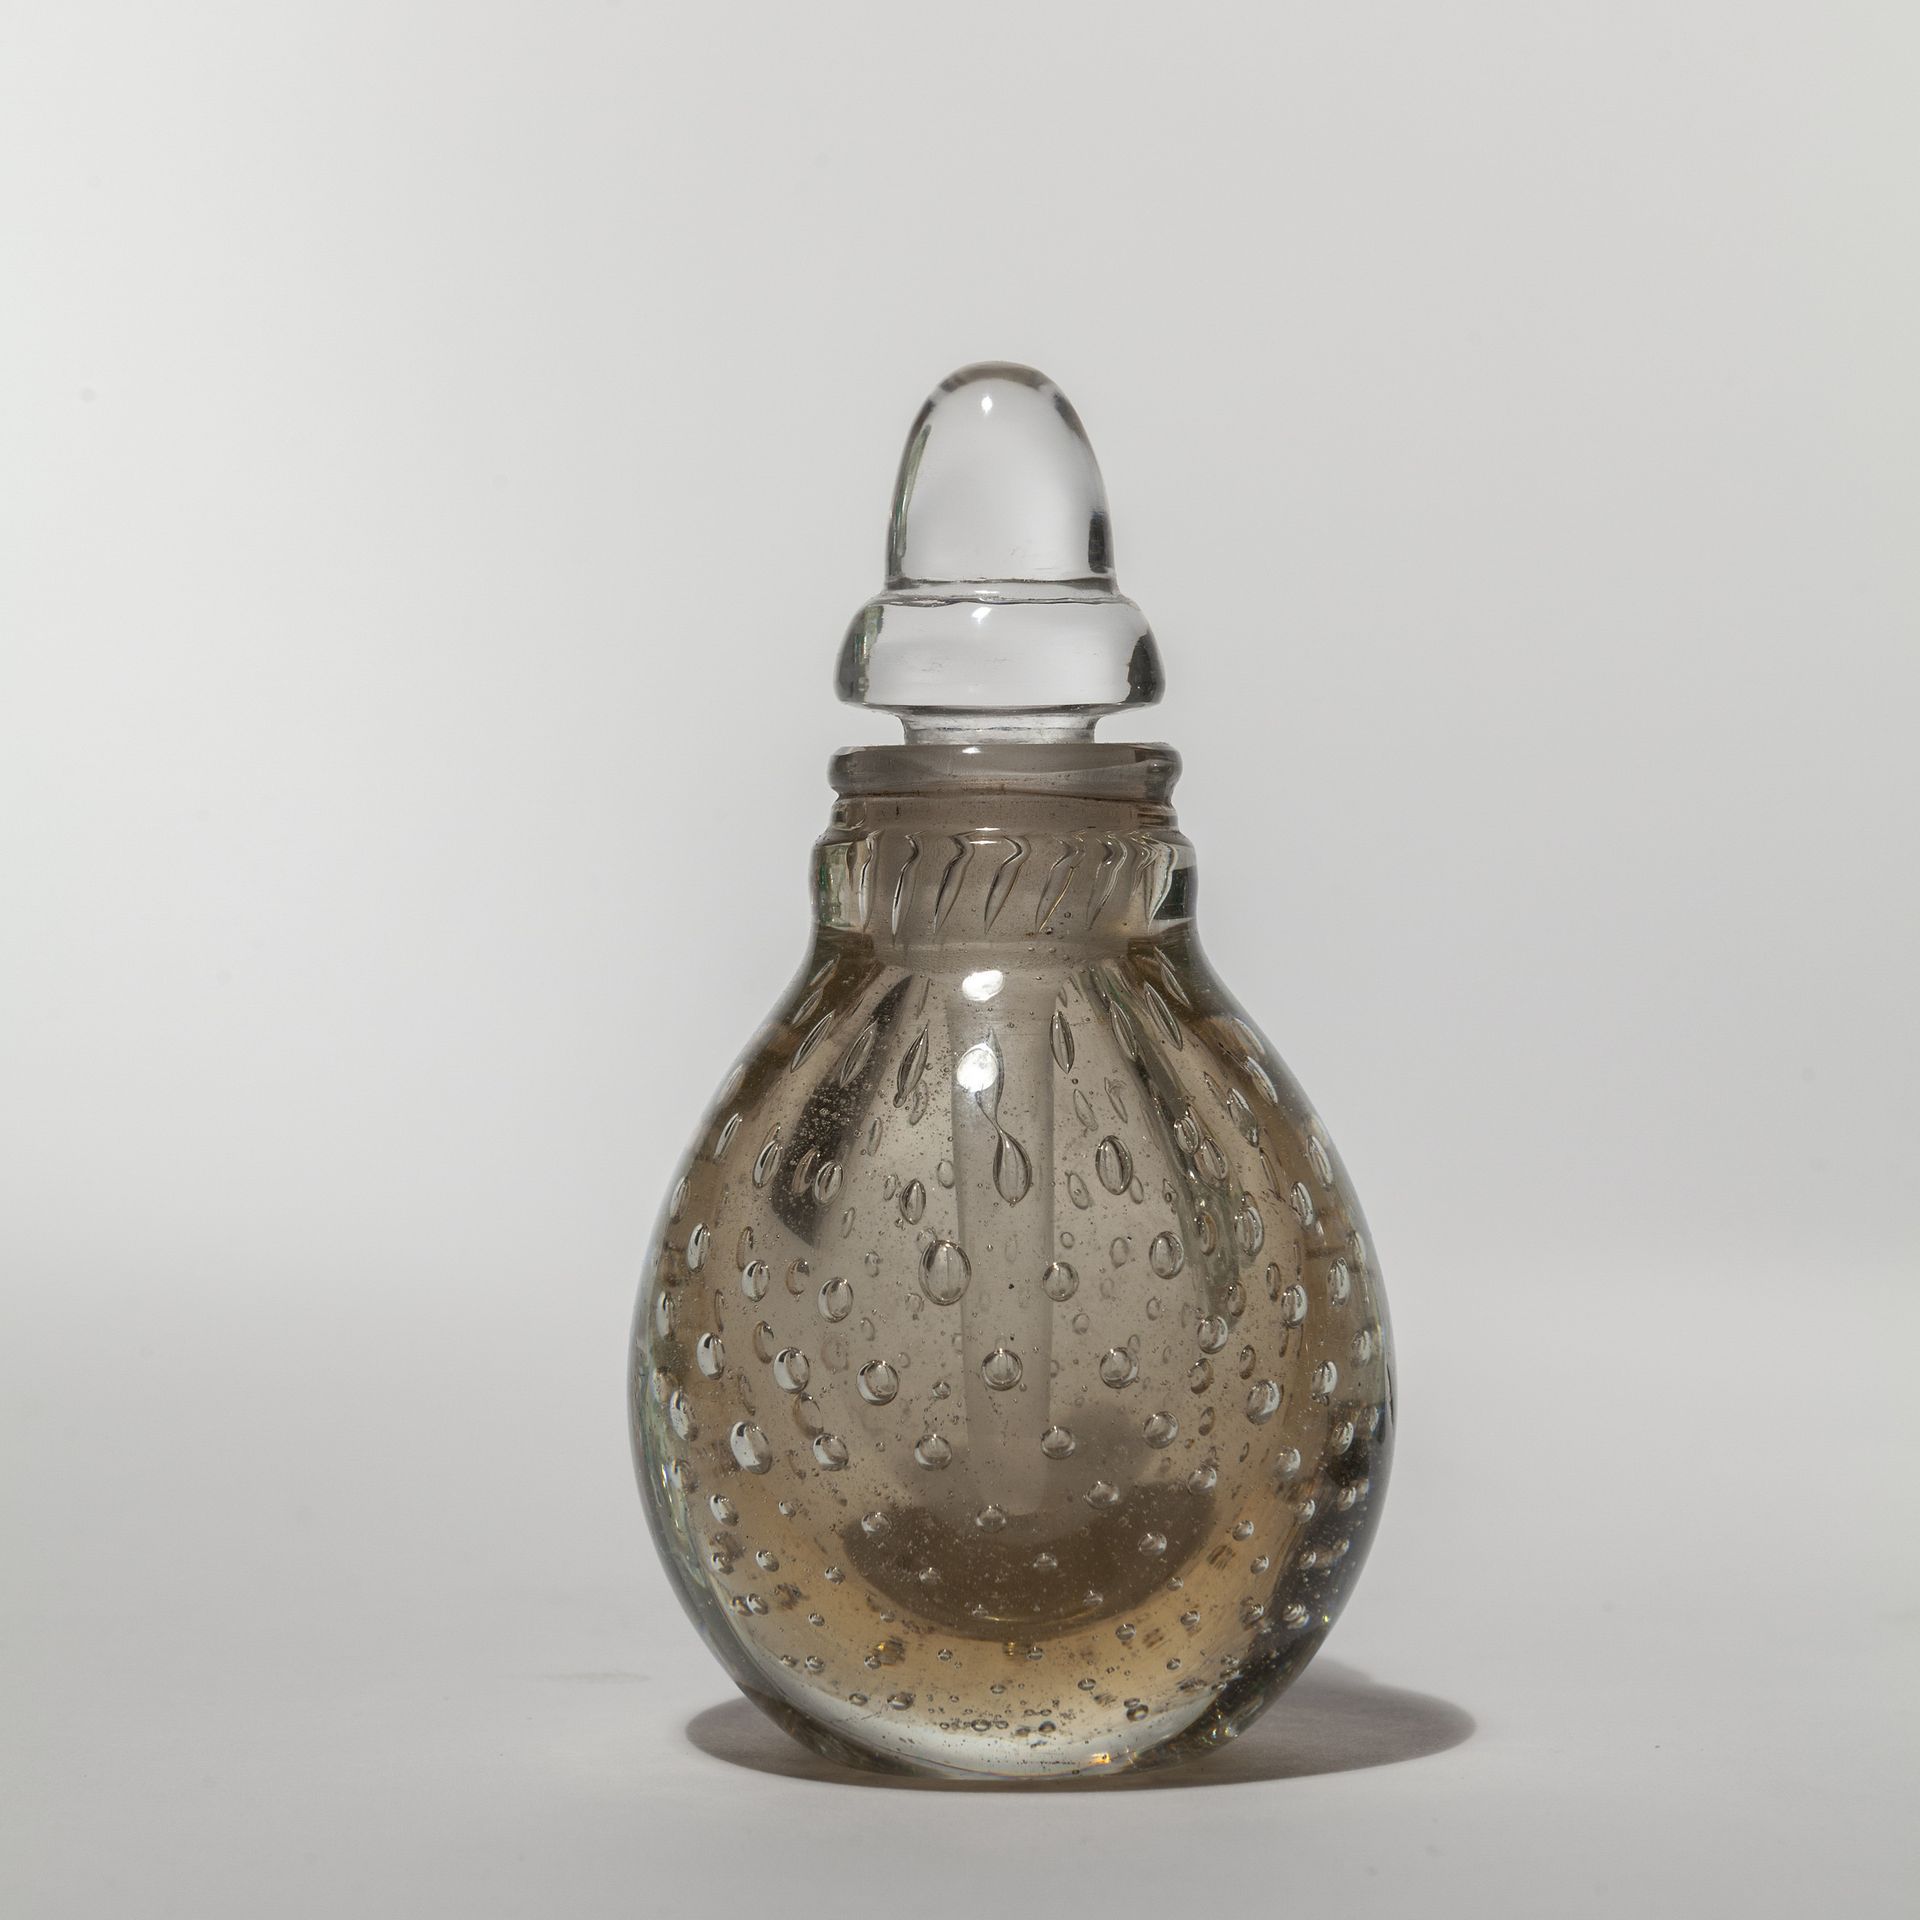 SCARPA CARLO VENINI CARLO SCARPA VENINI
琥珀色玻璃香水瓶，有小的规则的气泡 1930年代
酸性标记 "VENINI MU&hellip;